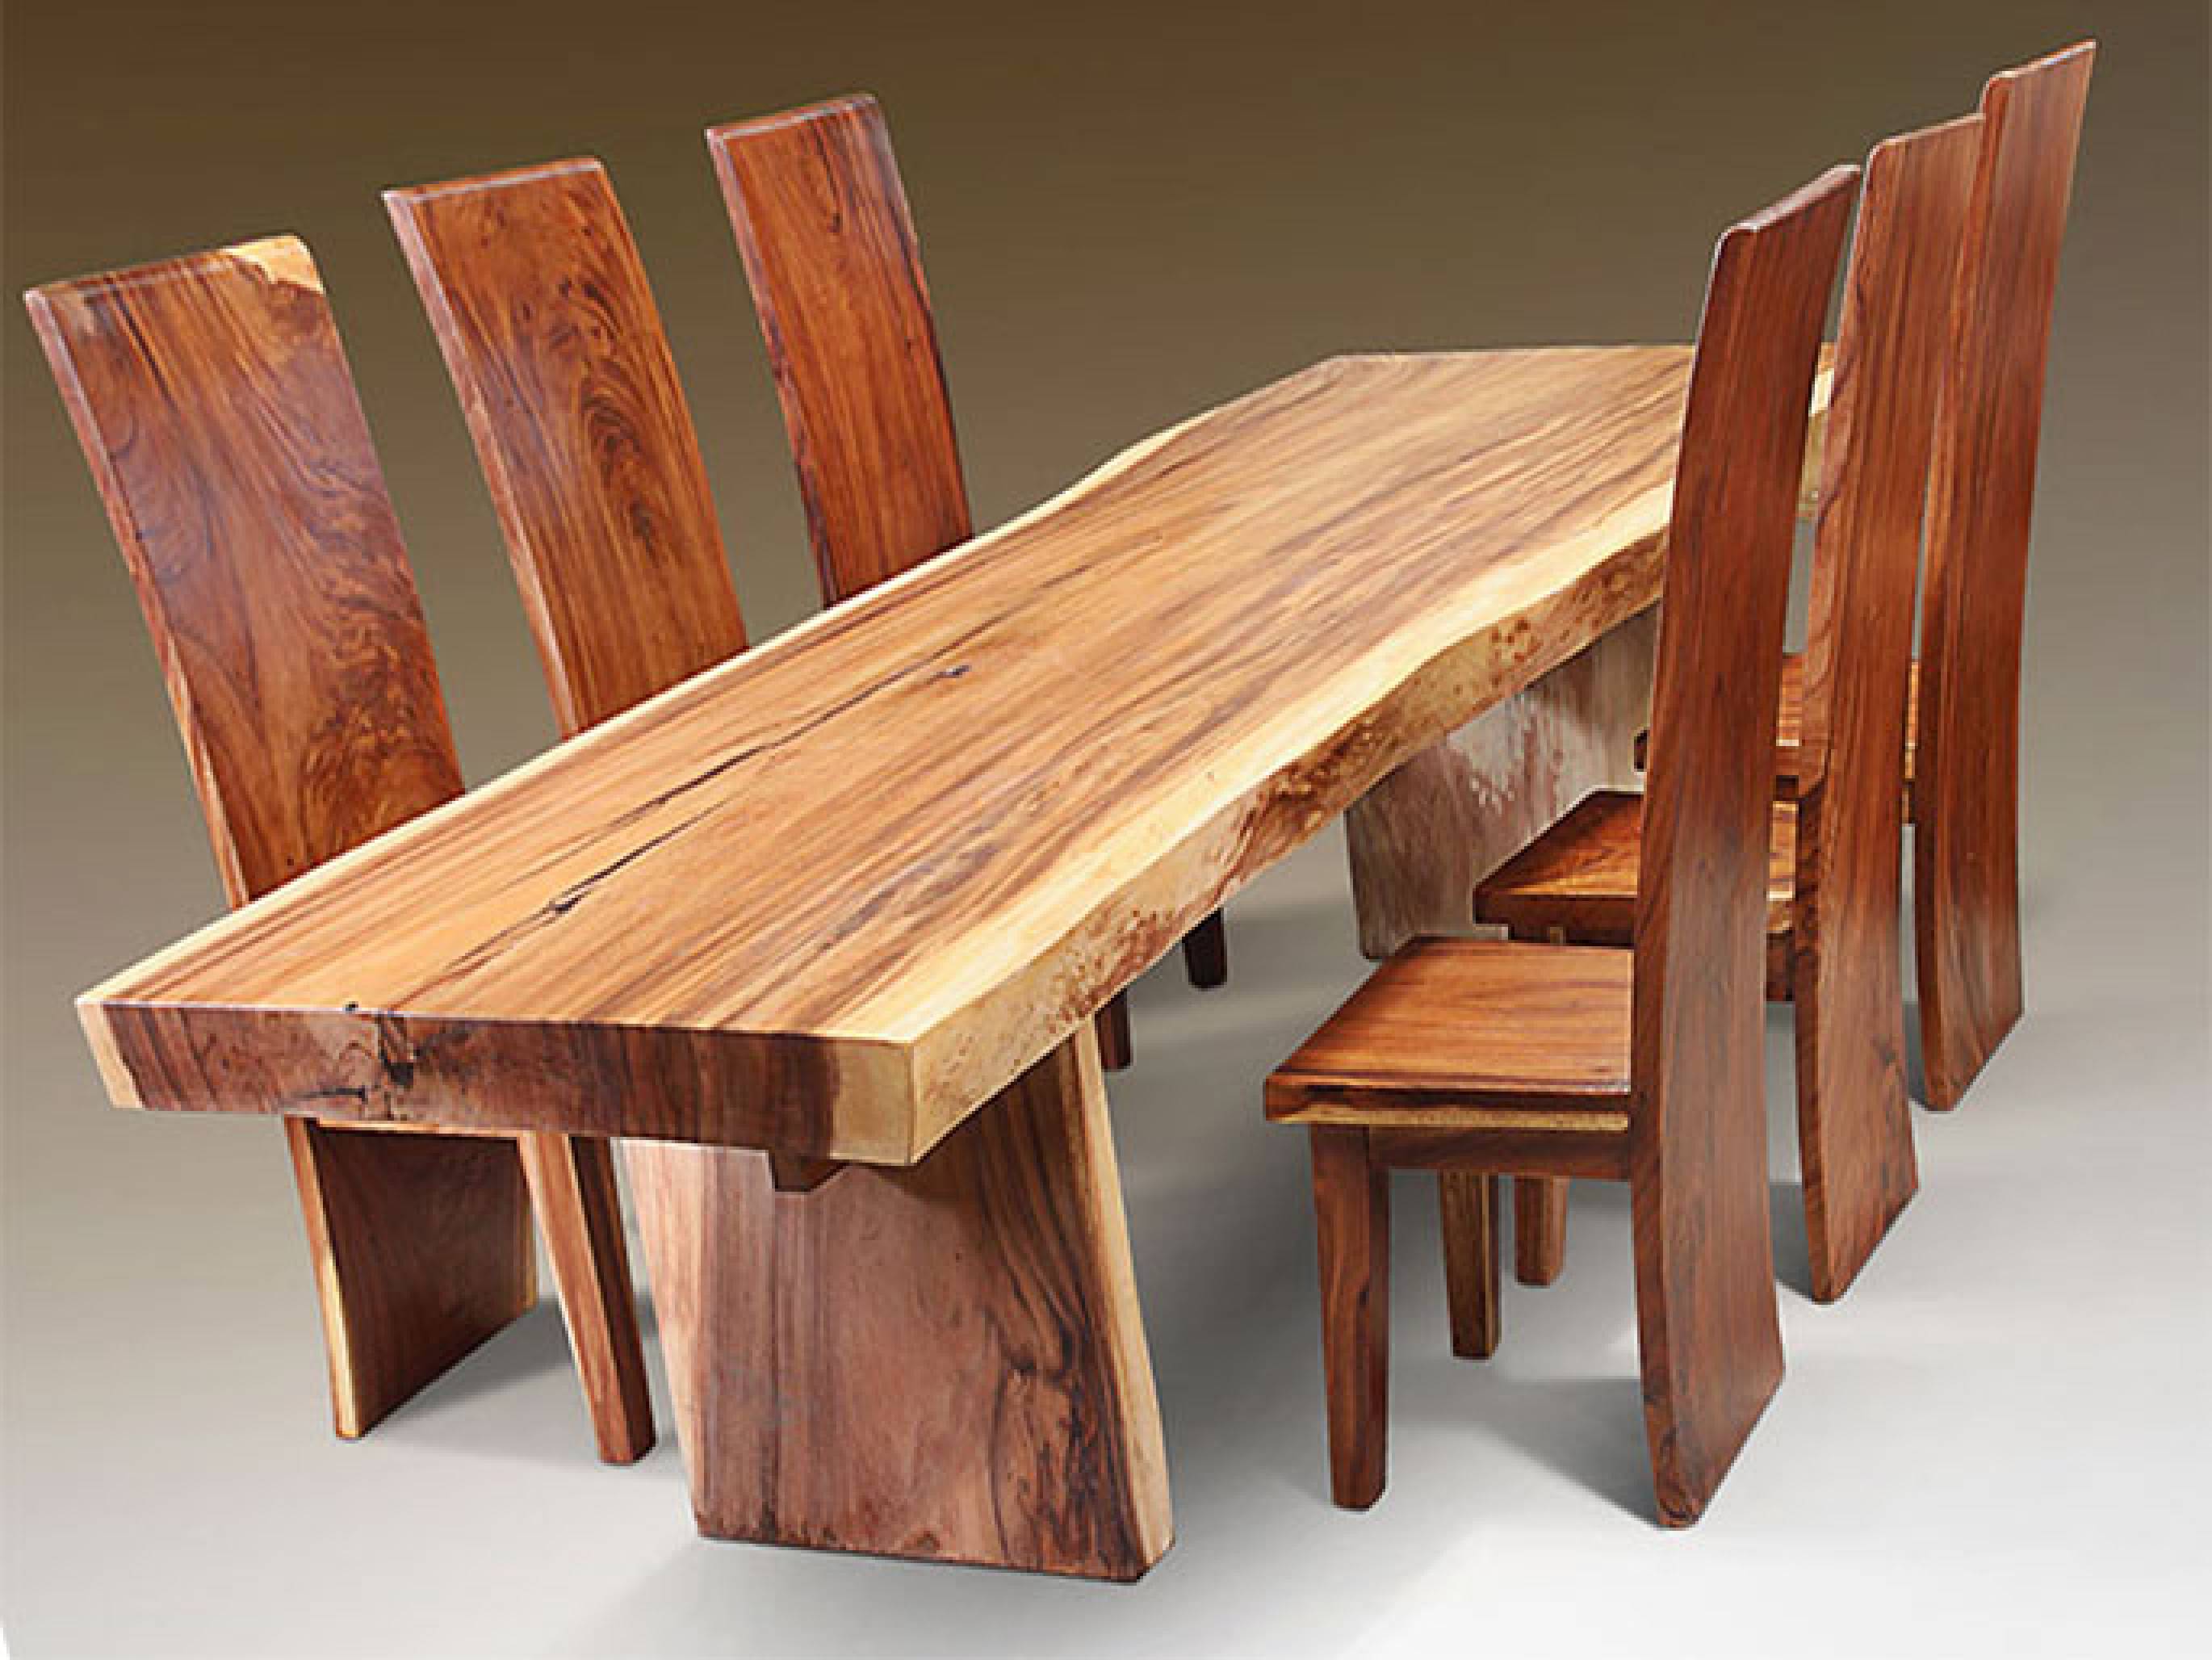 IPE Wood Furniture